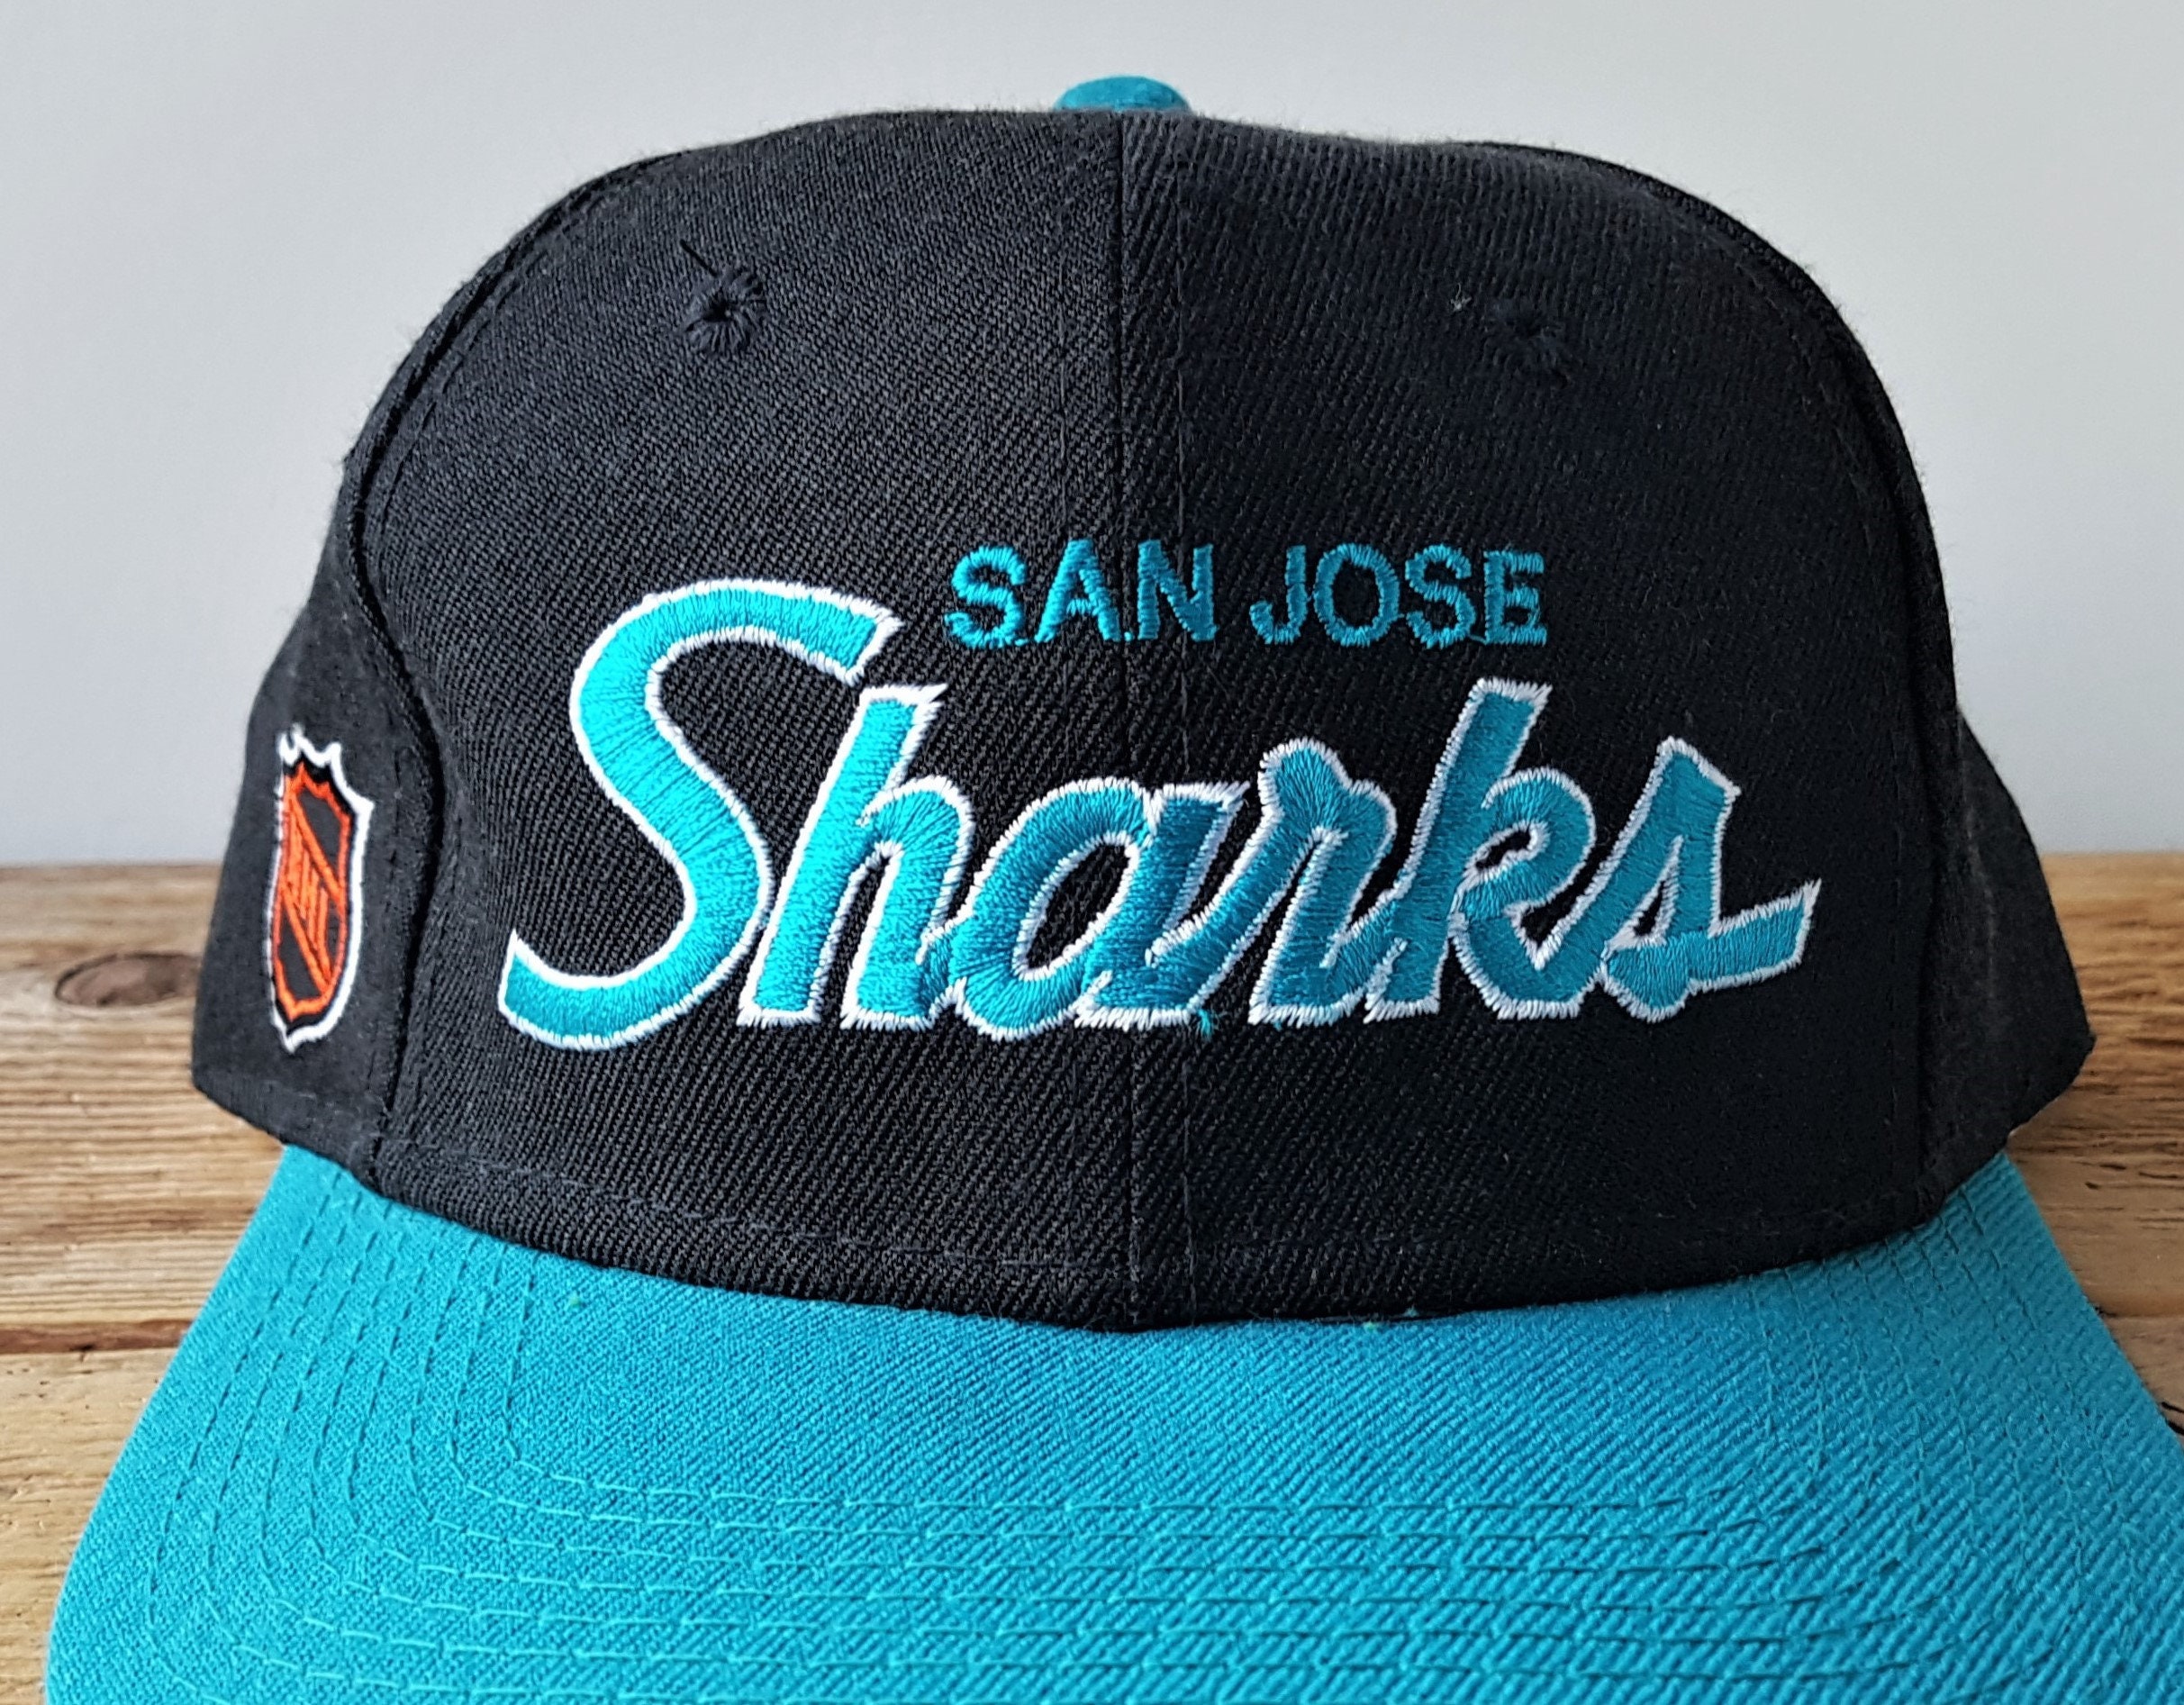 Outerstuff Reverse Retro Precurve Snapback Hat - San Jose Sharks